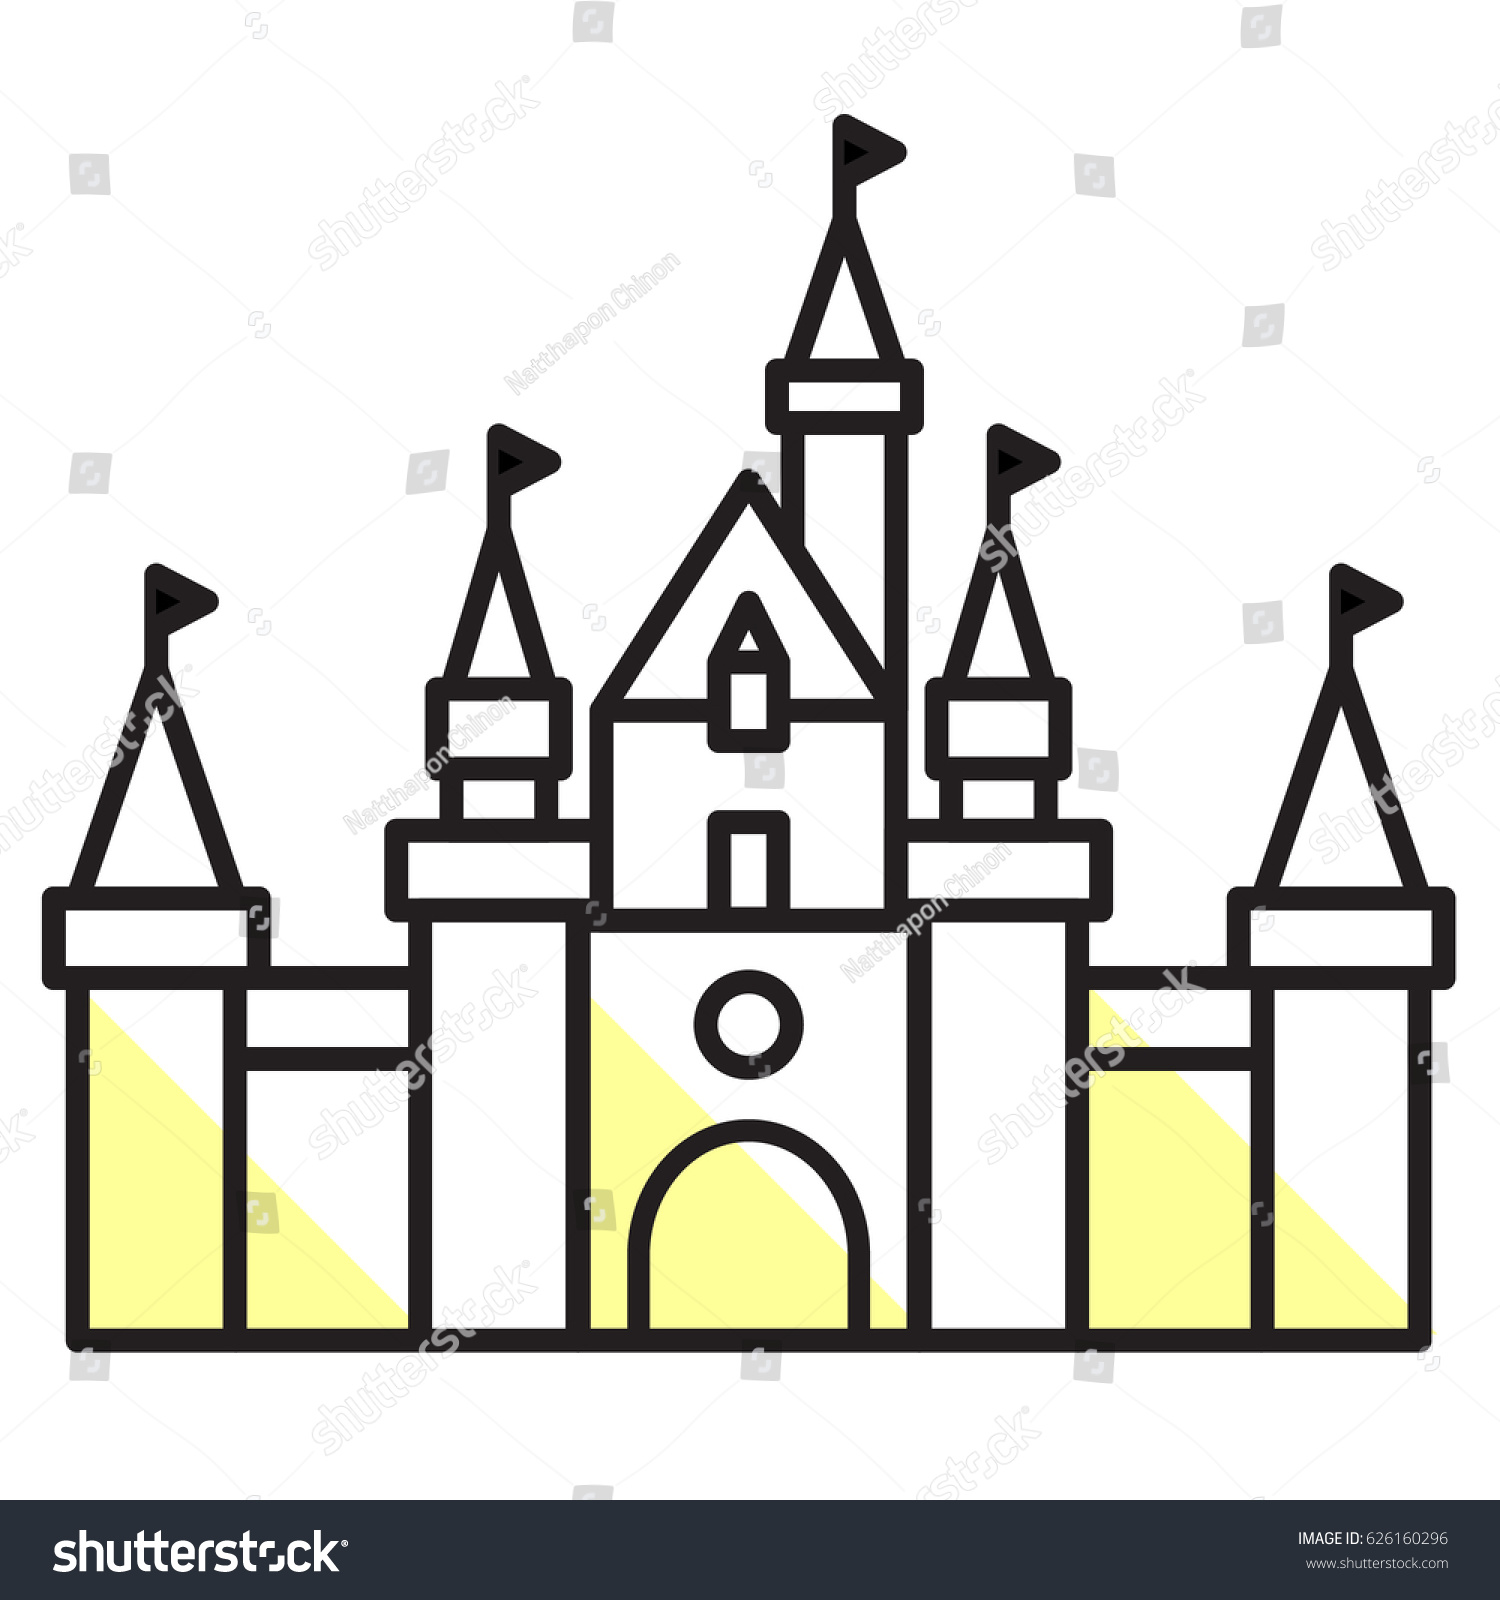 SVG of castle icon
 svg